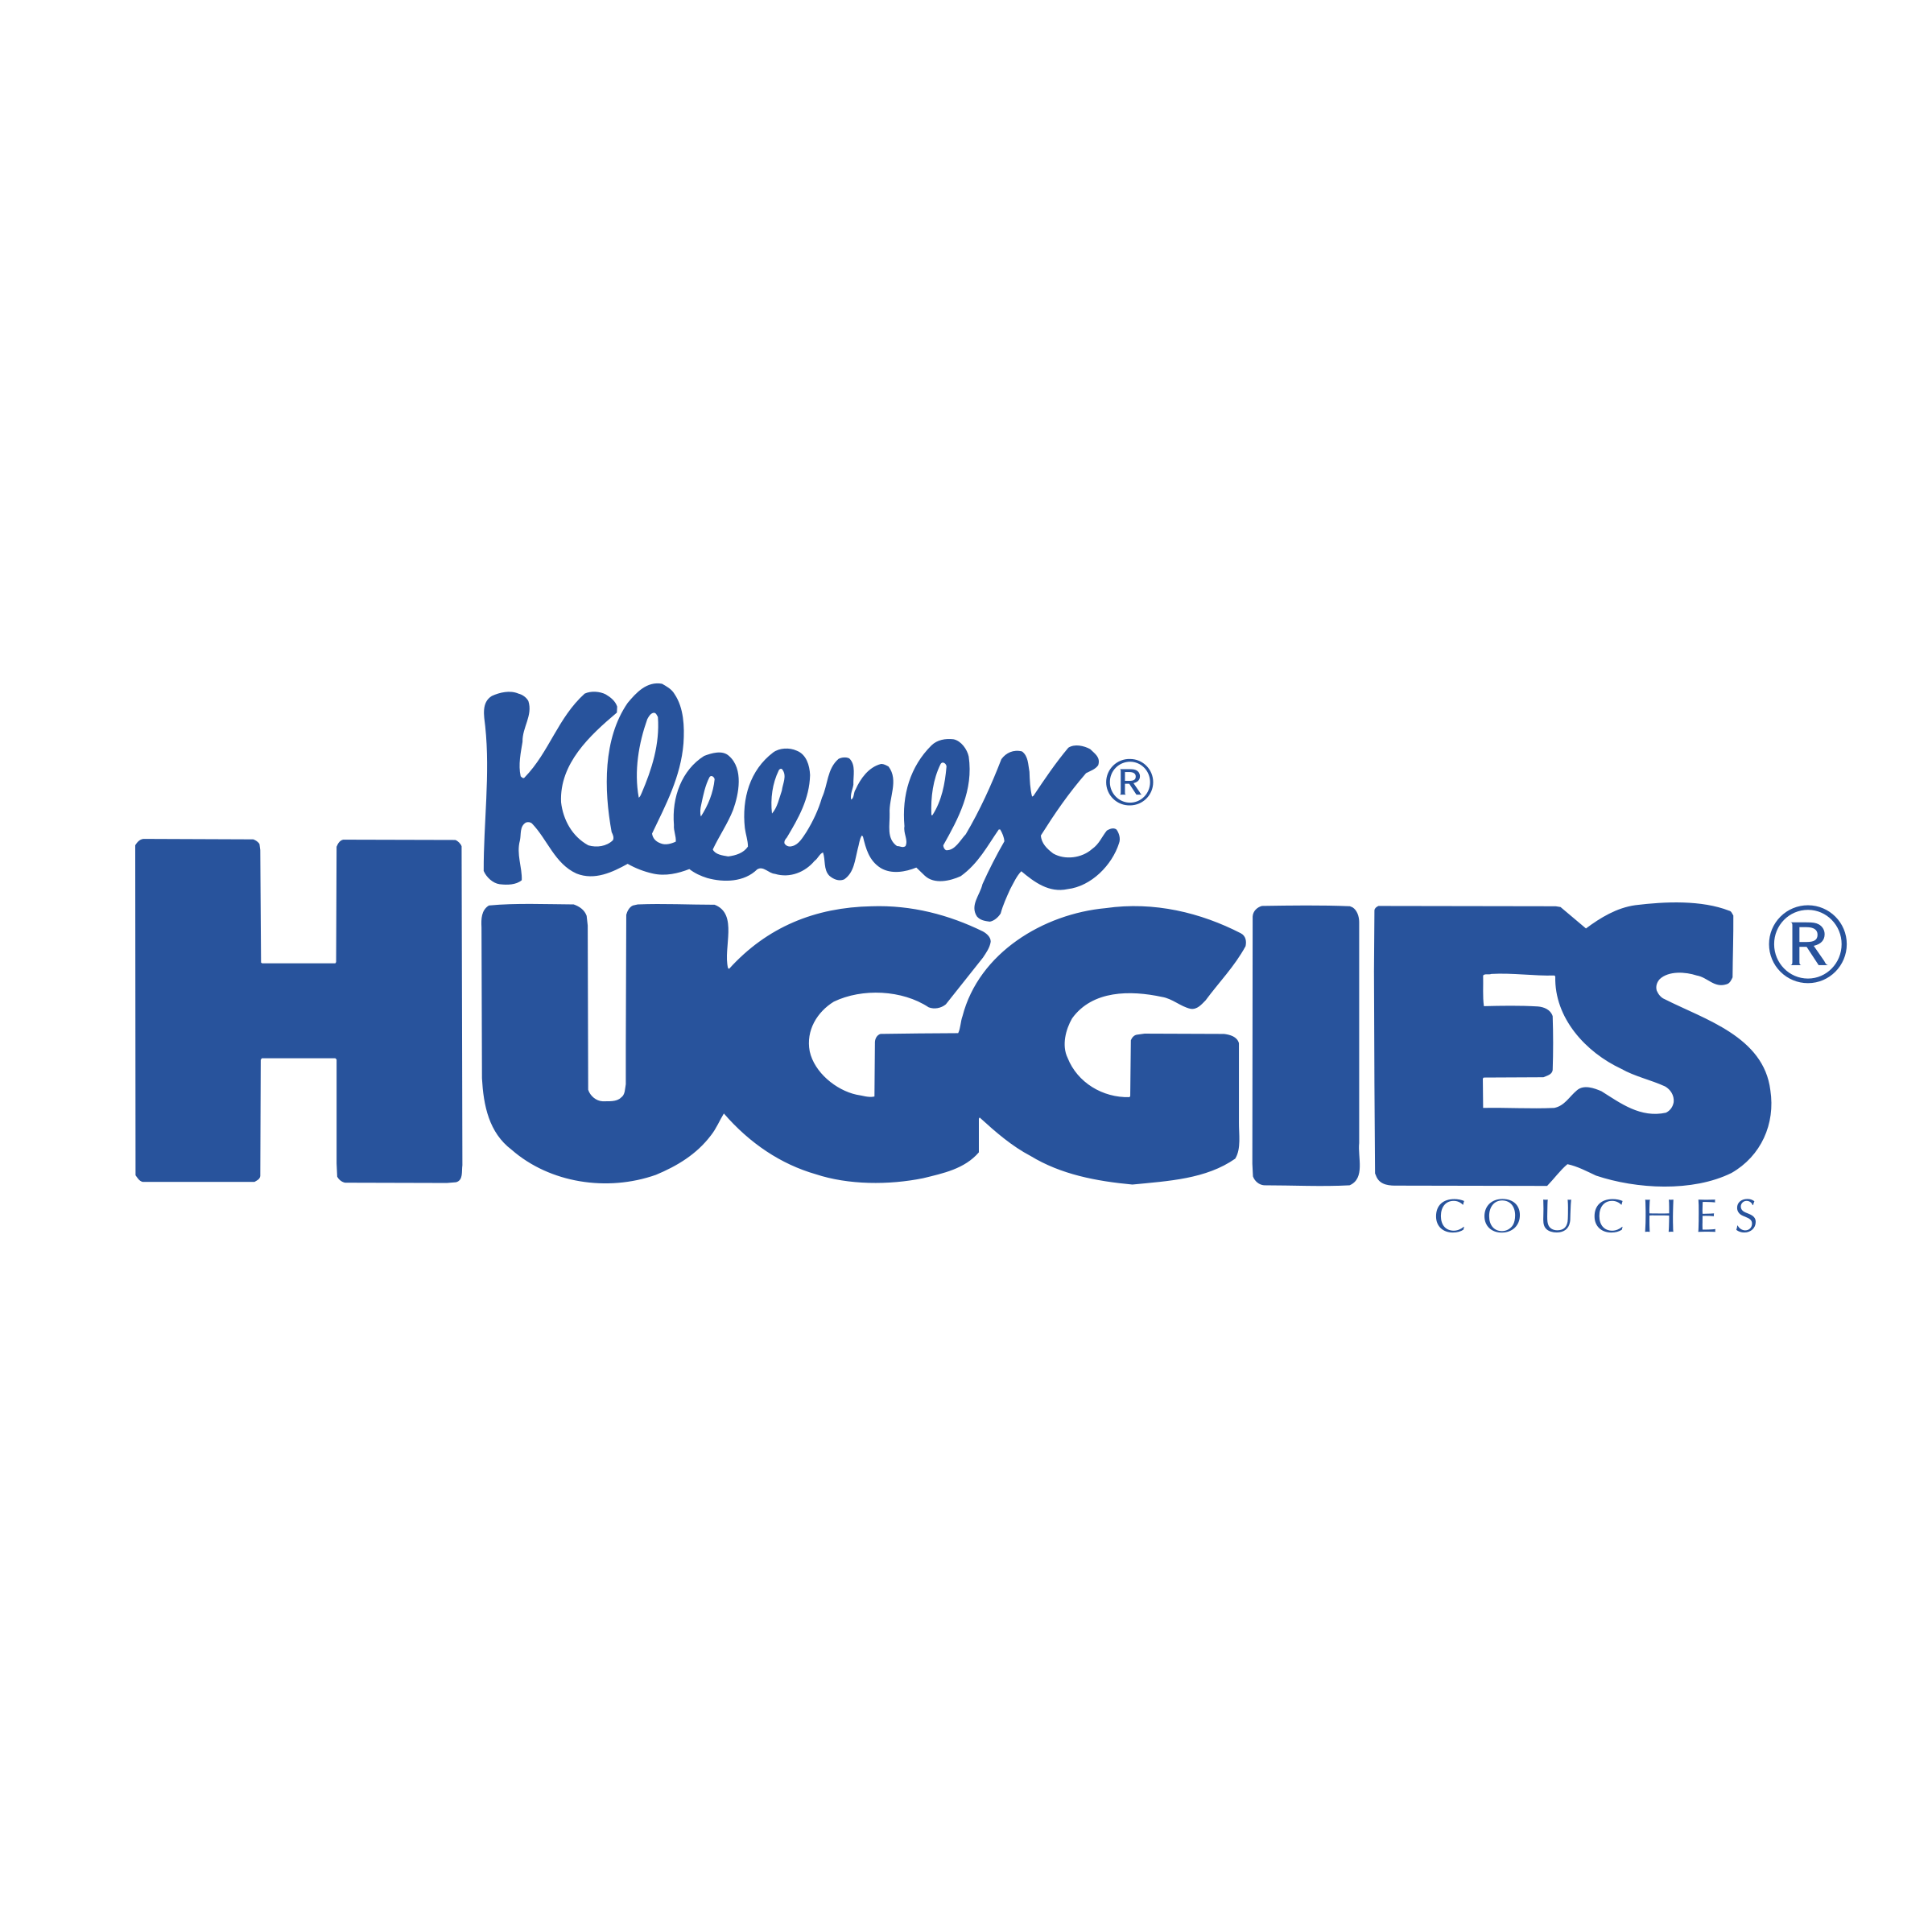 Huggies Logo - Huggies Logo PNG Transparent & SVG Vector